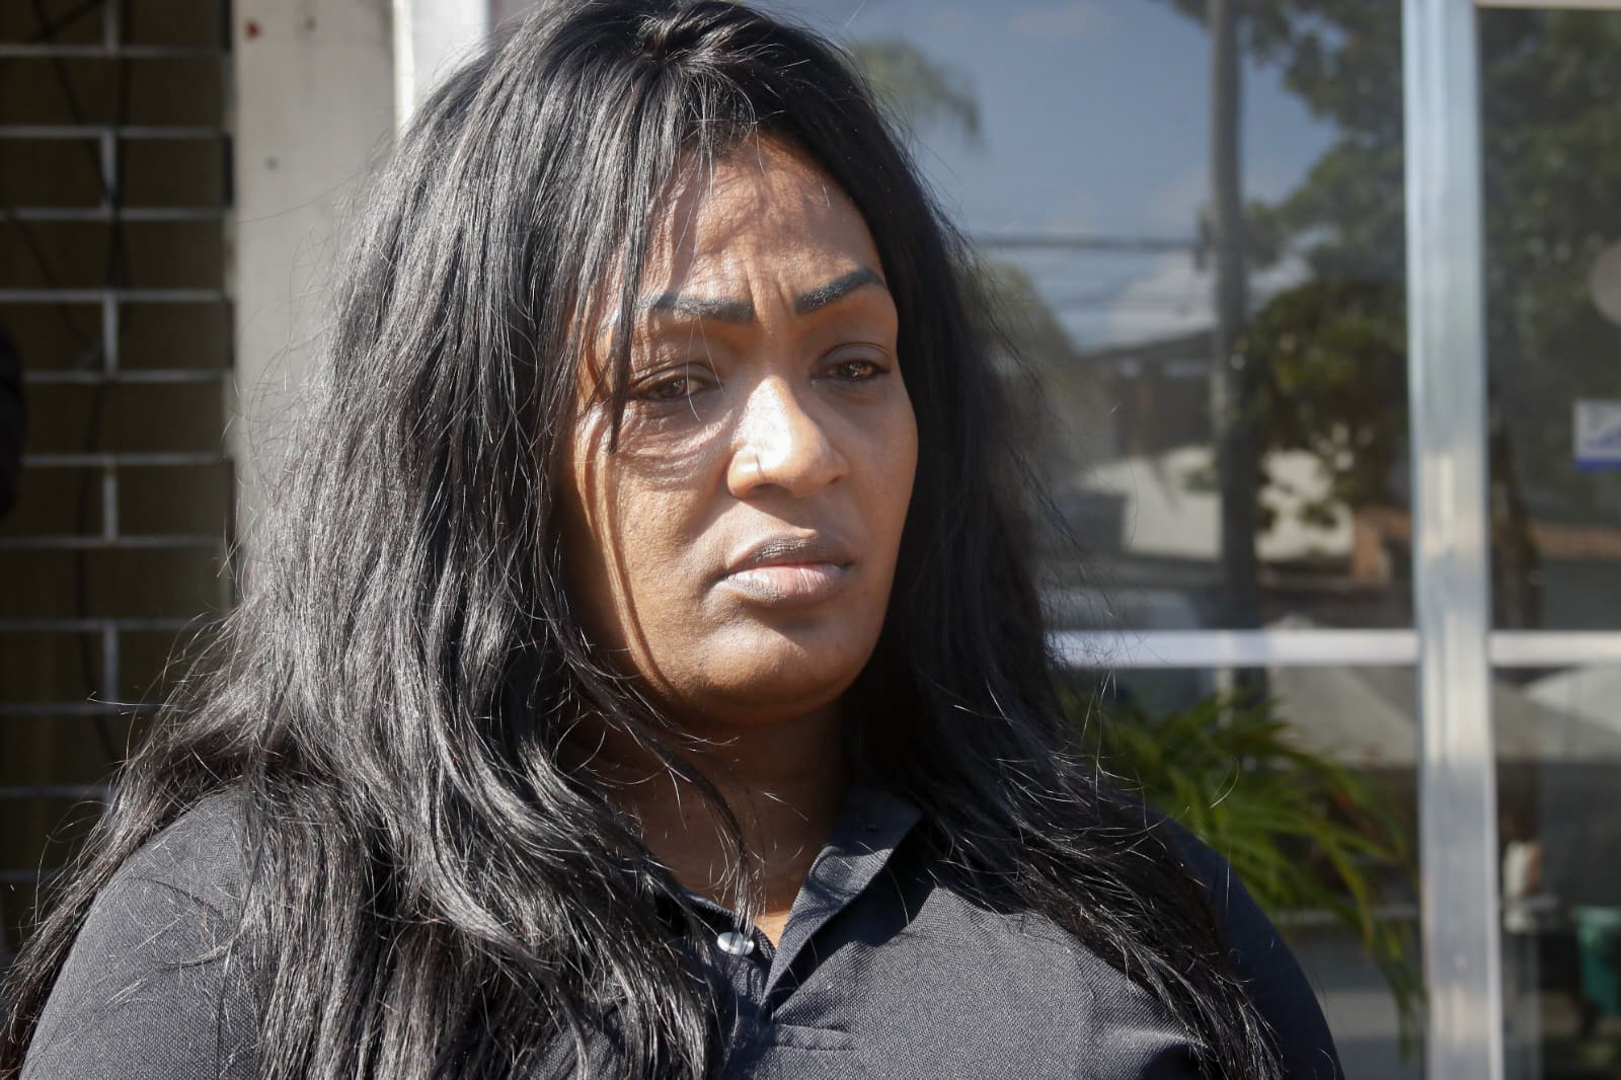 A cunhada Camila Tavares desabafou sobre o caso e clamou por Justiça